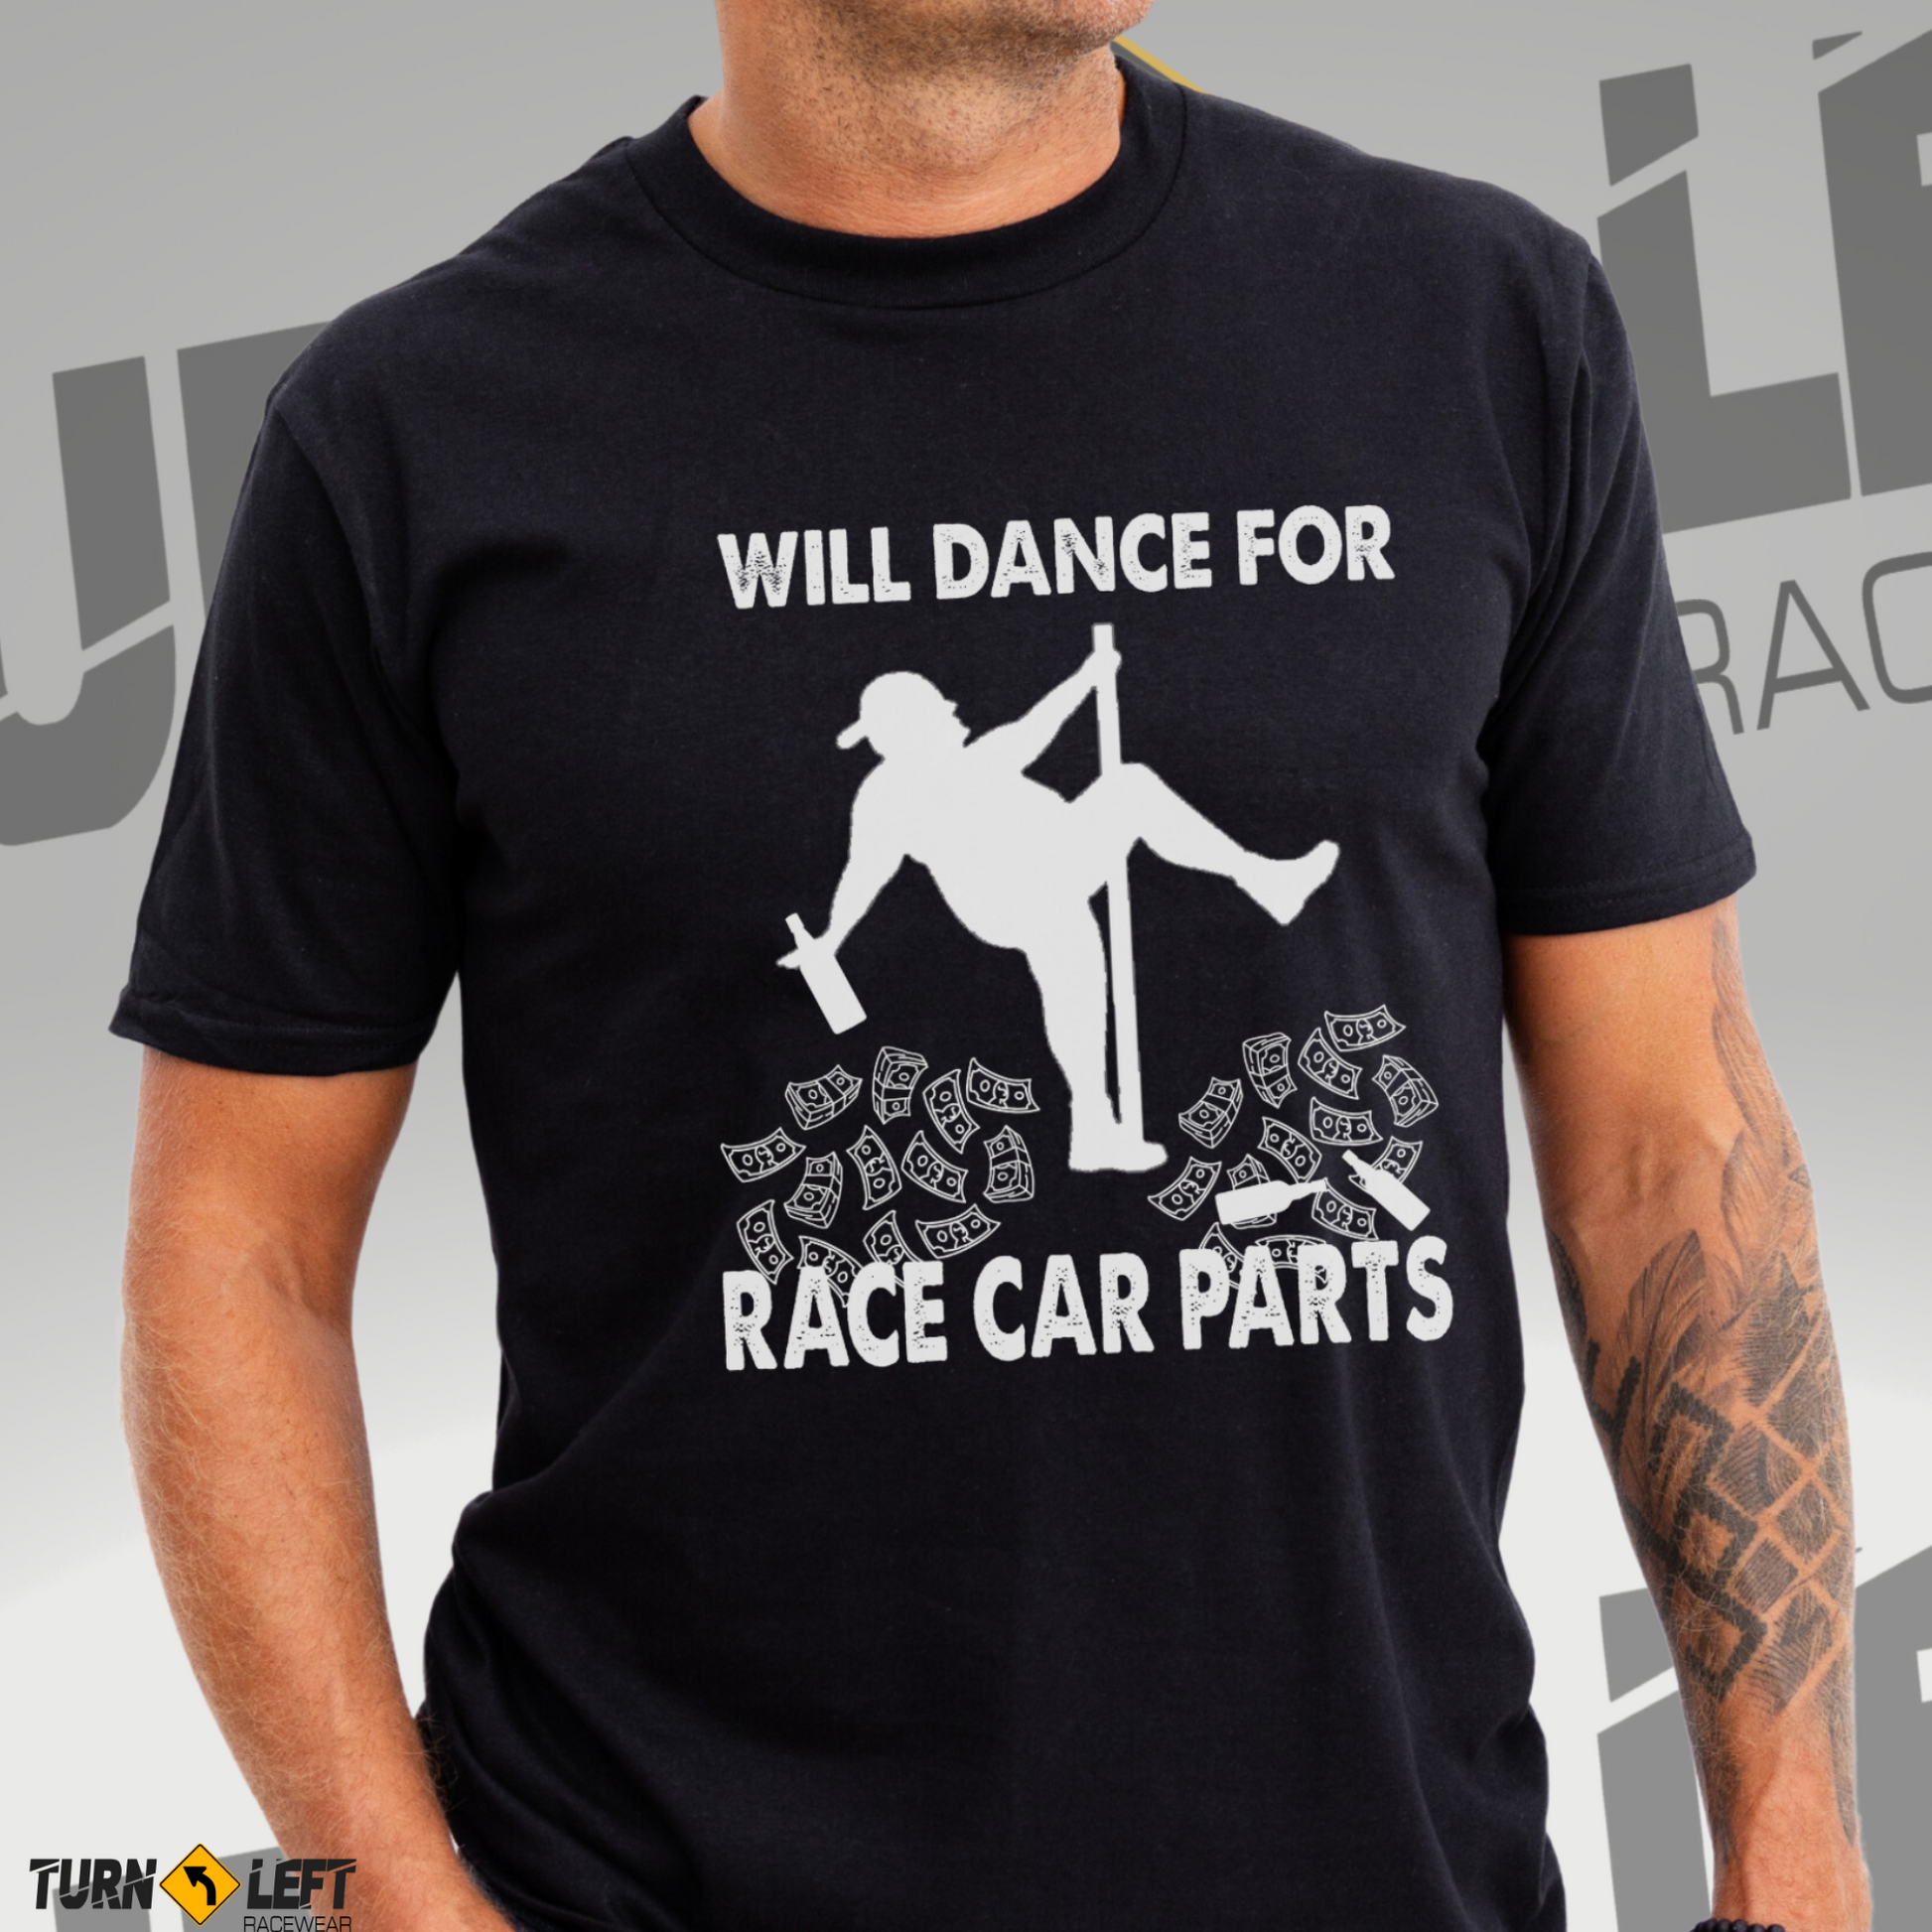 Will Dance For Race Car Parts Shirt, Fat Man Pole Dancer tshirts. Men's dirt track racing shirts. Will dance for racecar part tshirt